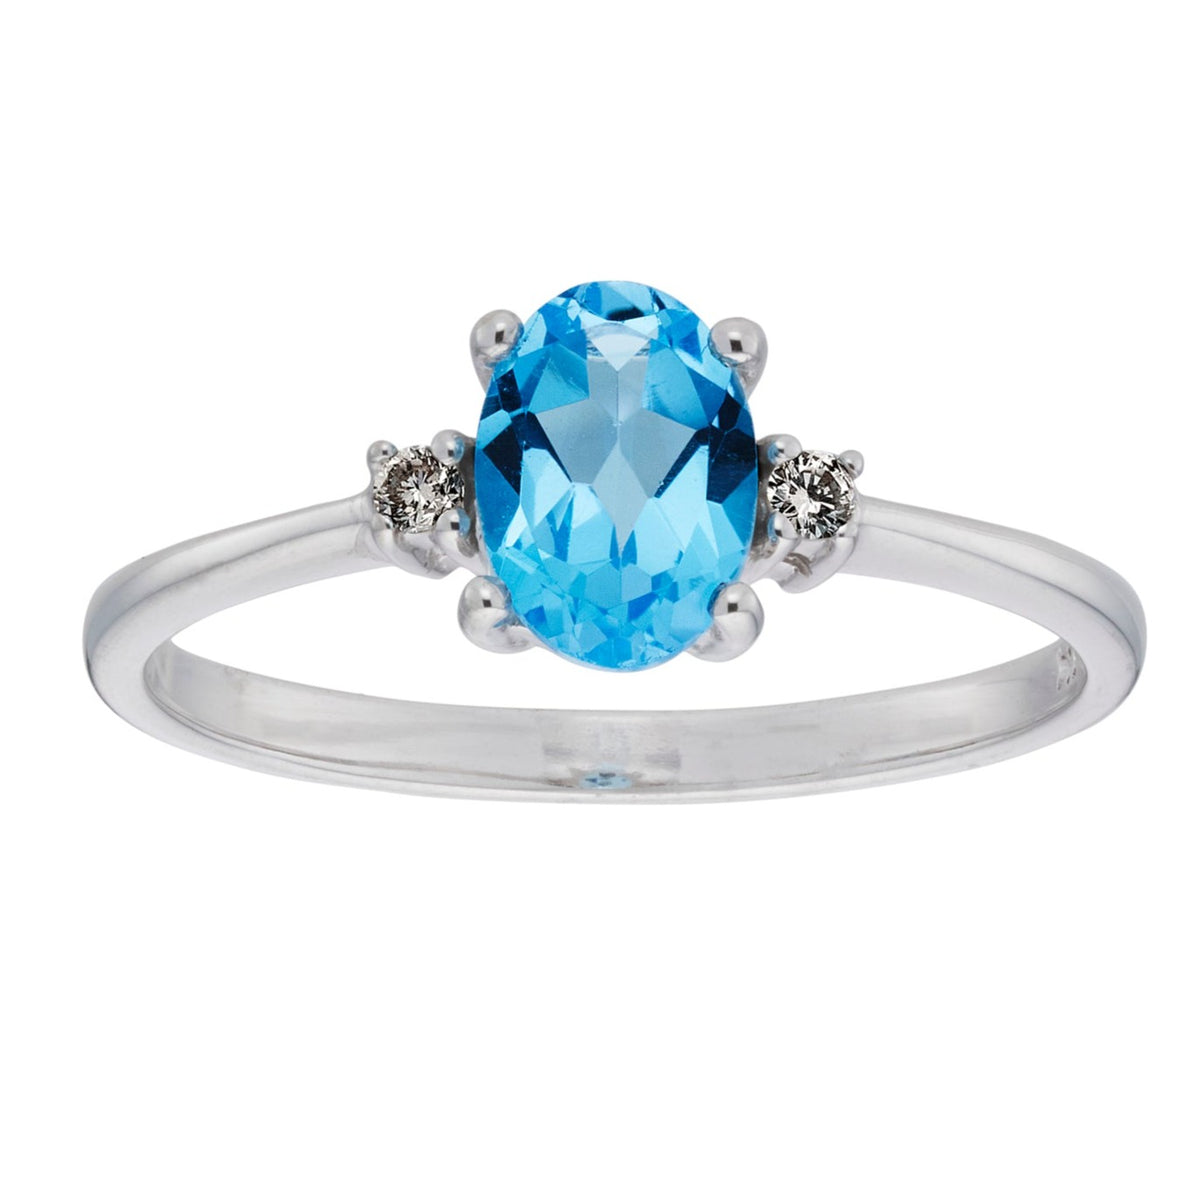 9ct white gold 7x5mm oval blue topaz &amp; diamond ring 0.03ct